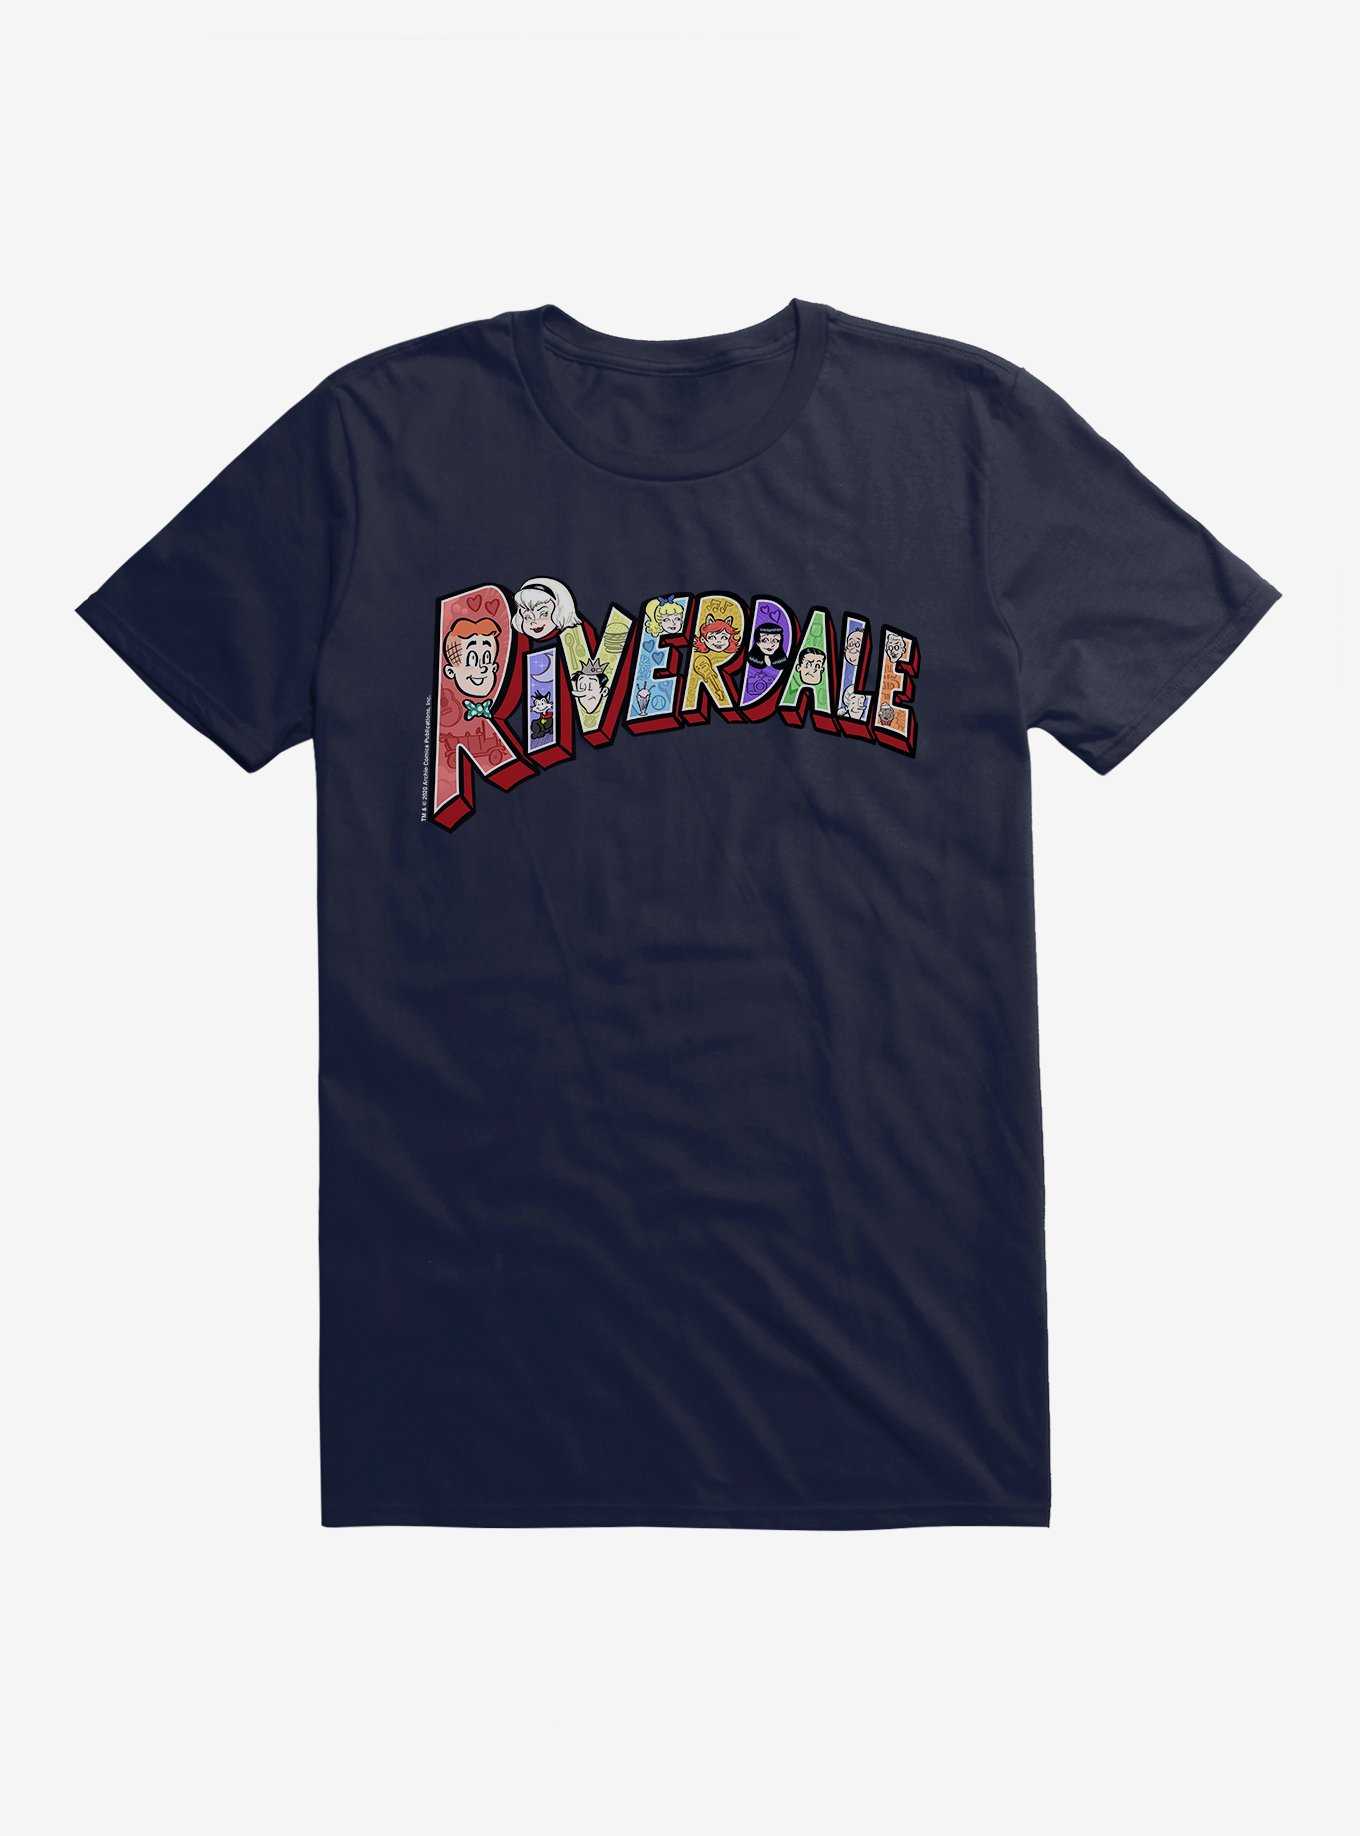 Archie Comics Riverdale Postcard Logo T-Shirt, , hi-res